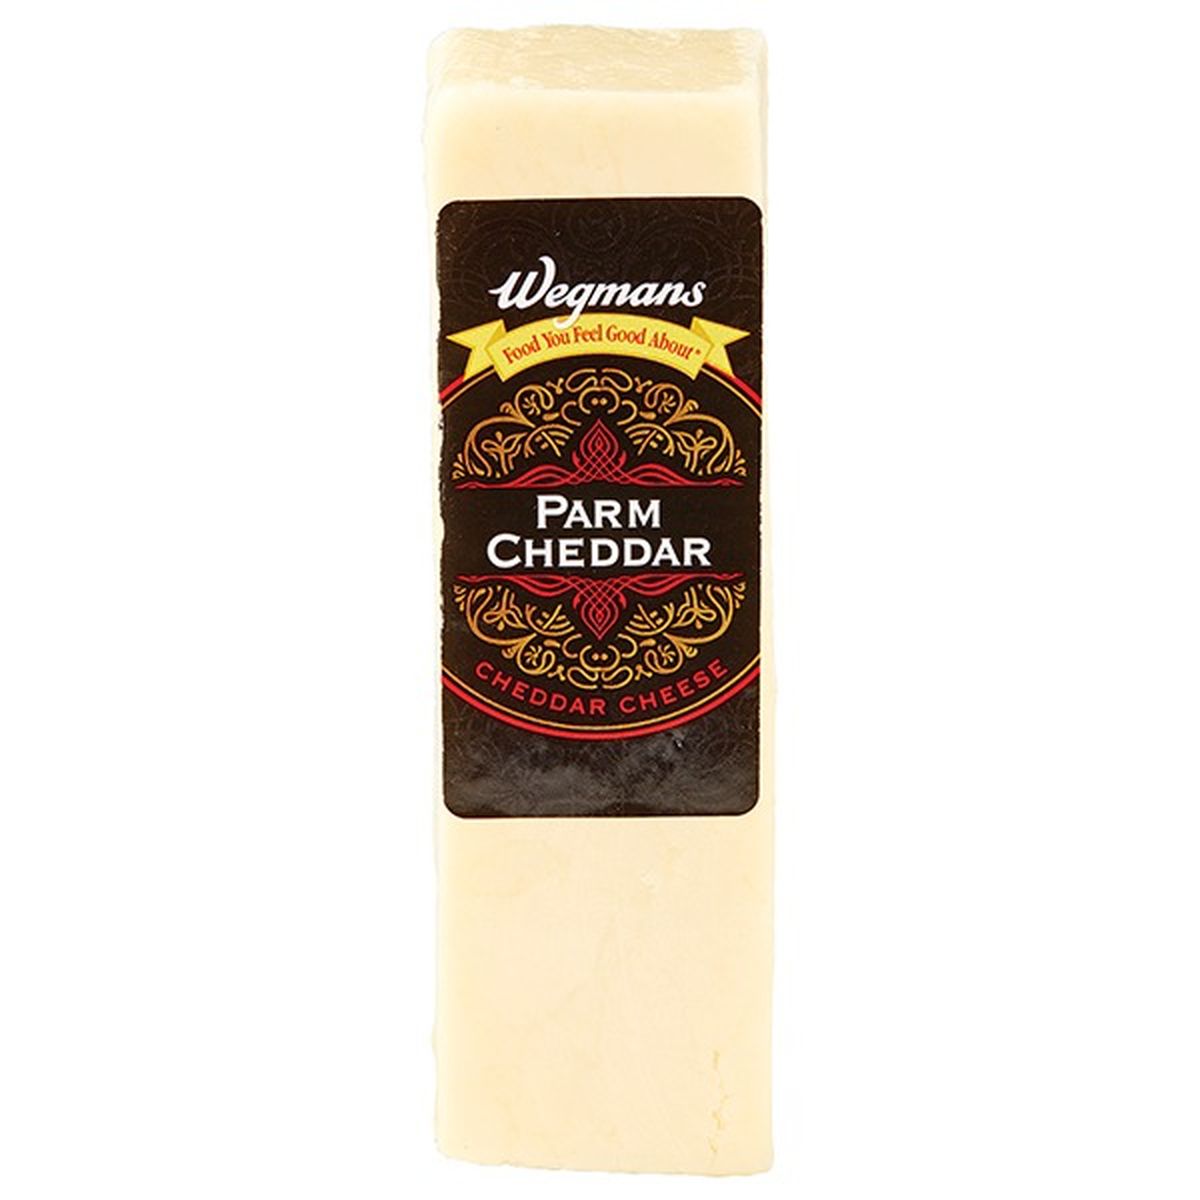 Calories in Wegmans Cheese, ParmCheddar